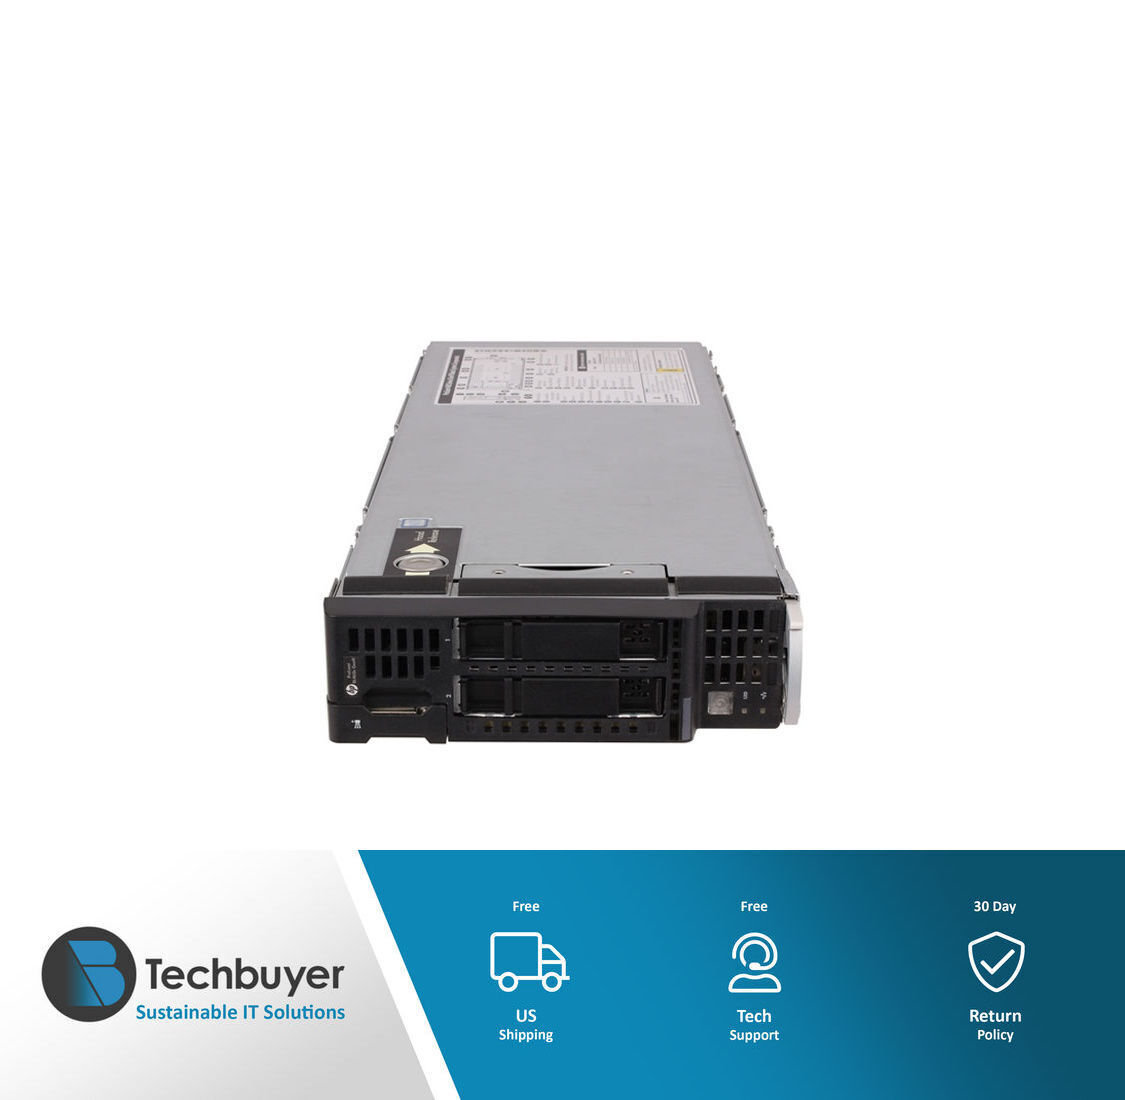 HP BL460C G9 Gen9 V4 CTO 10GB/20GB Flexilom Blade Server - 727021-B21V4